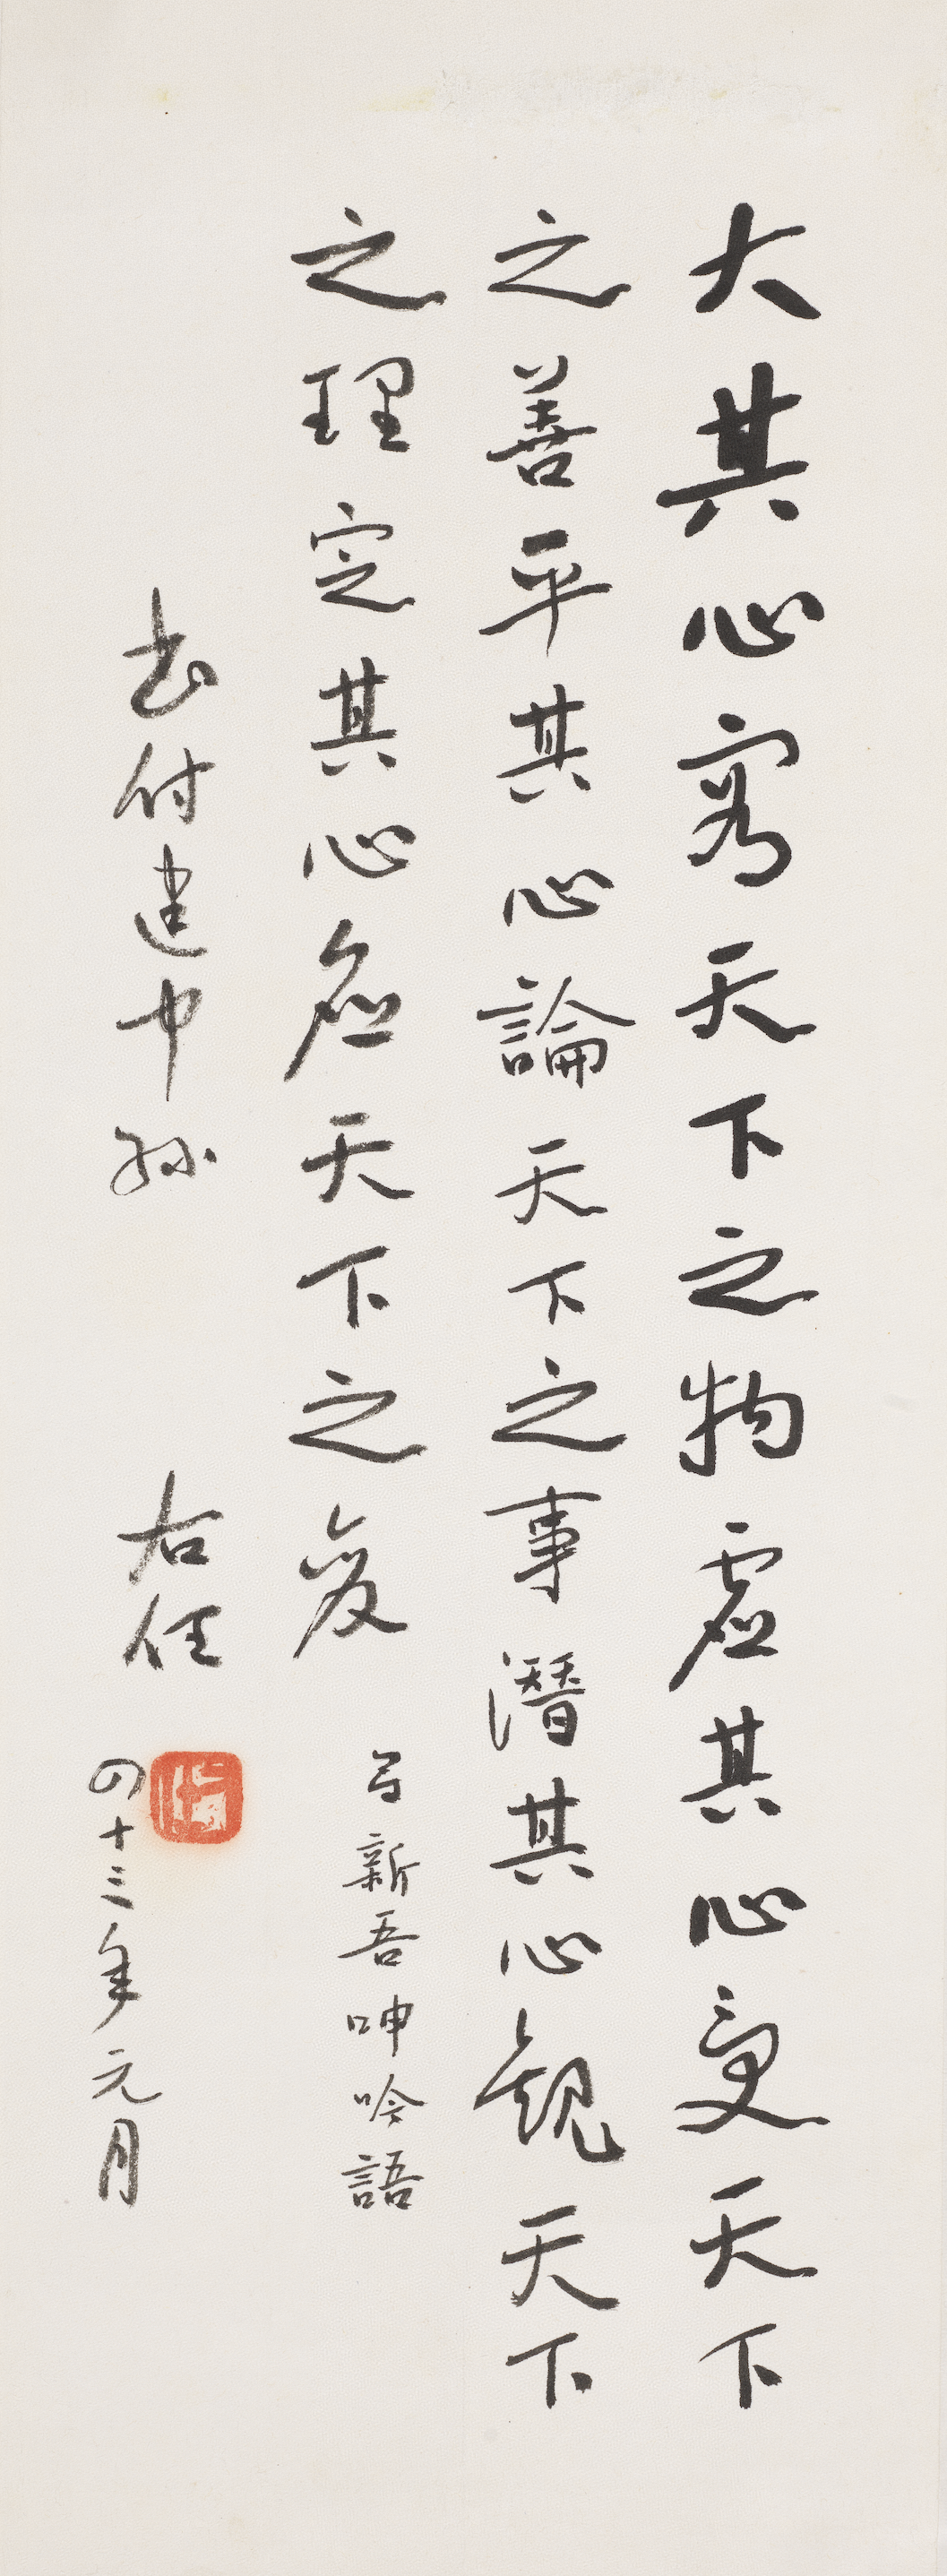 Lu Kun's <i>Words of Moaning</i> in Semi-Regular Script